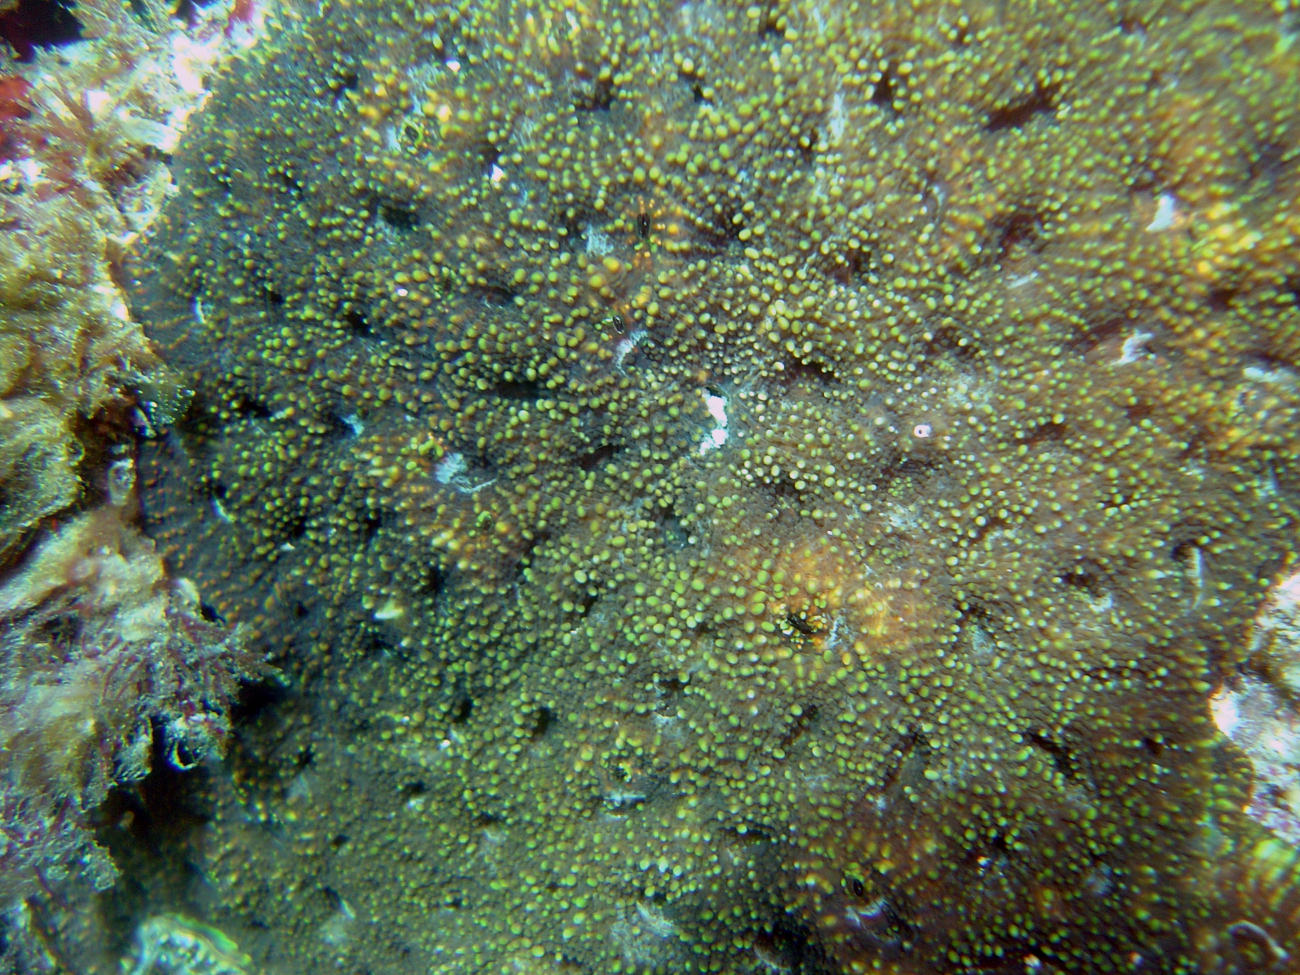 Coral (Discosoma sp